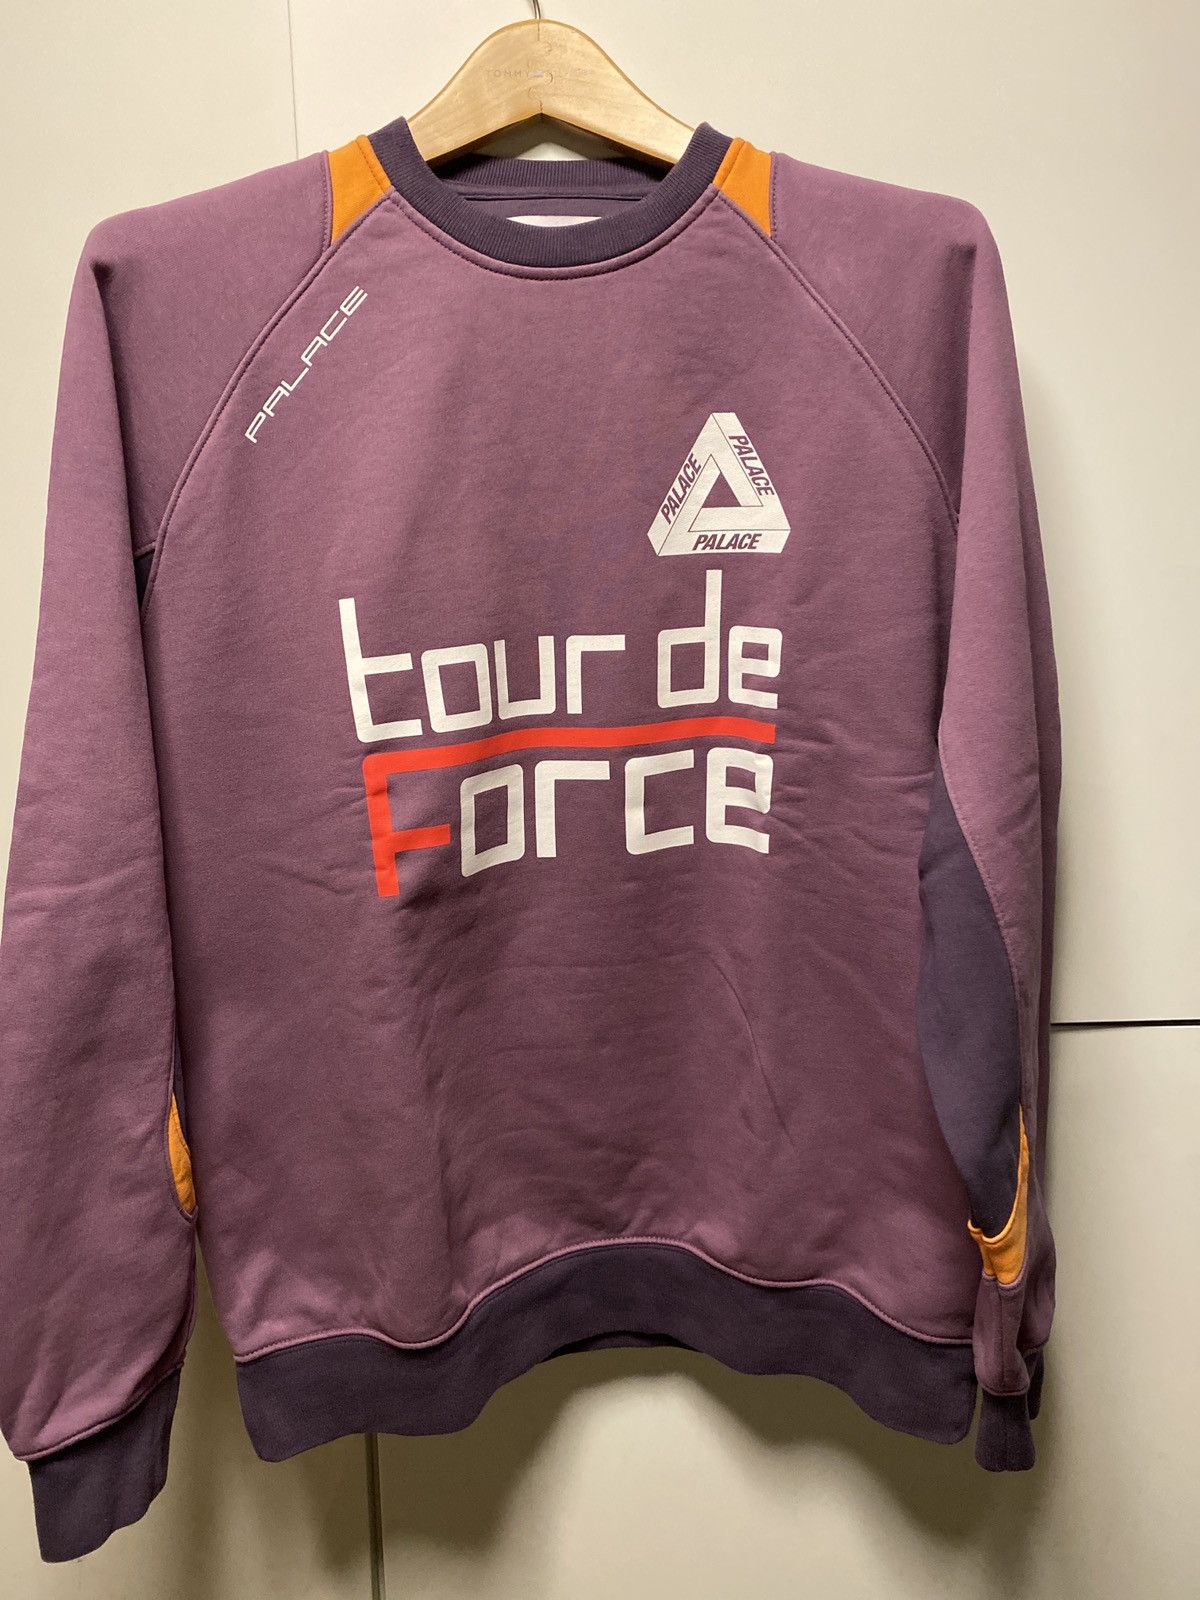 正規販売店 Palace sweater force Tour Force de Palace de Force ...